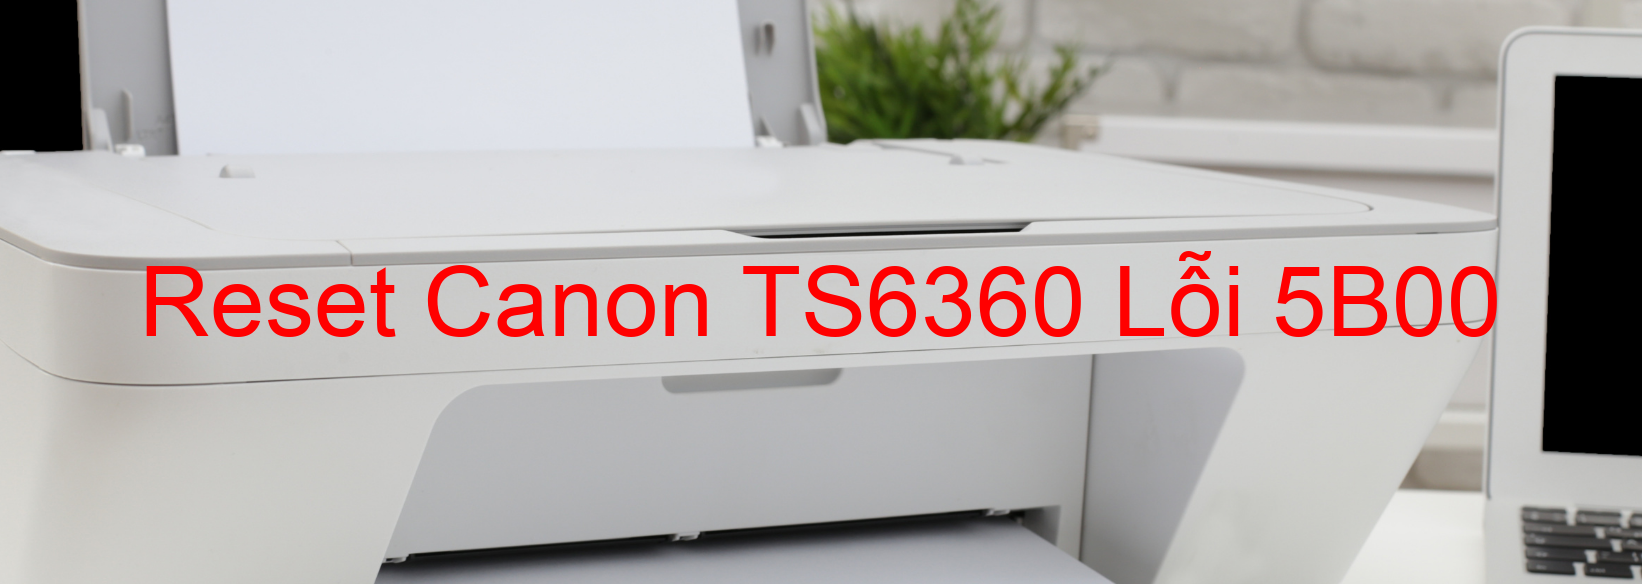 reset-canon-ts6360-loi-5b00.png